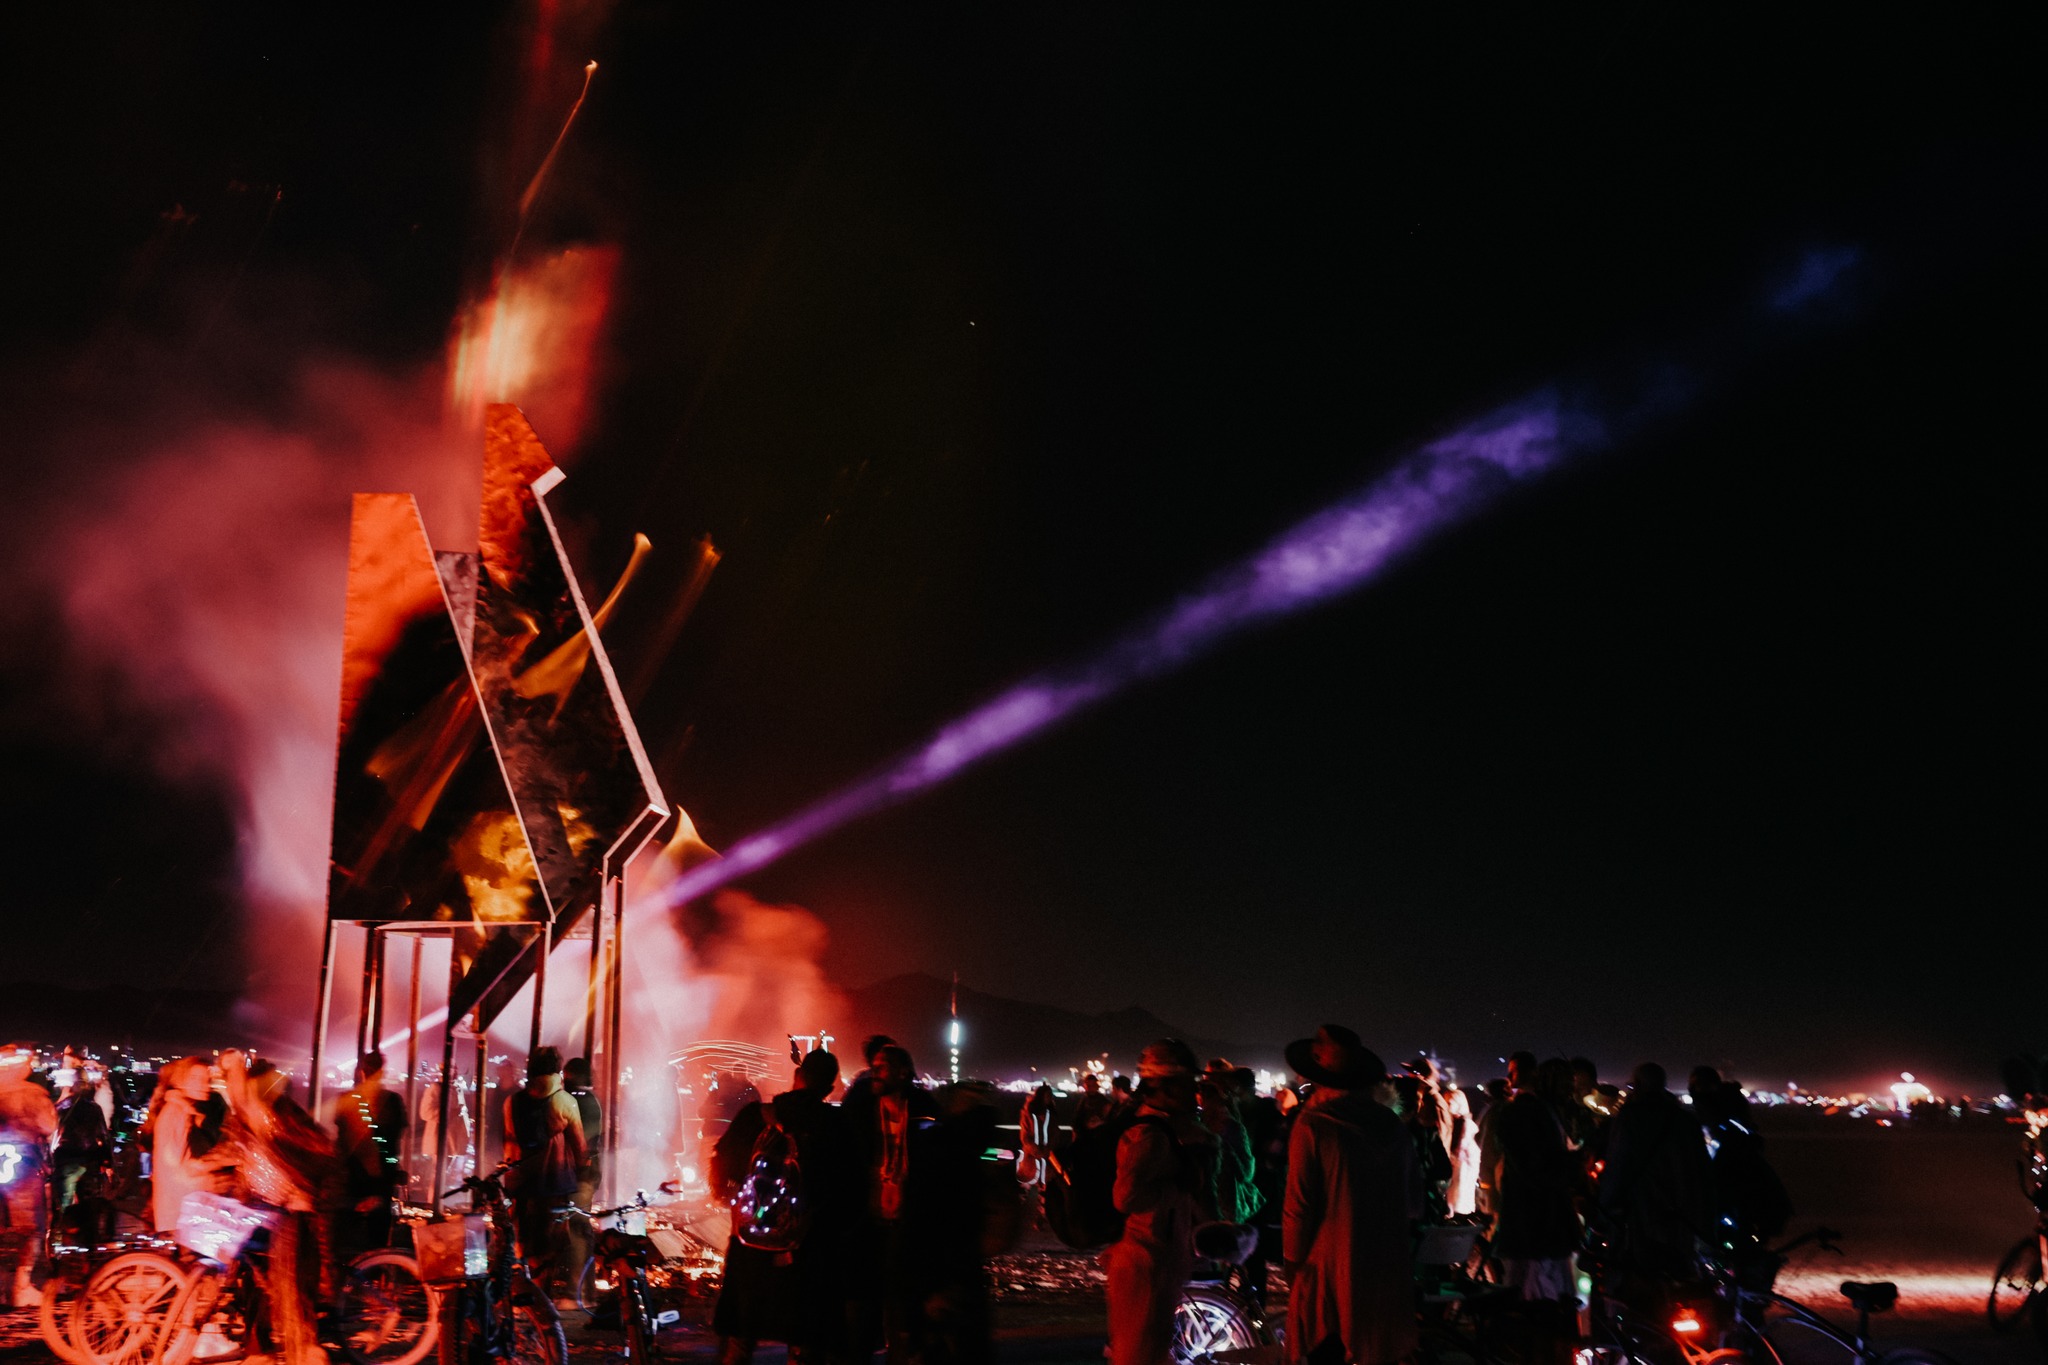 At Burning Man, installations from Ukraine were set up